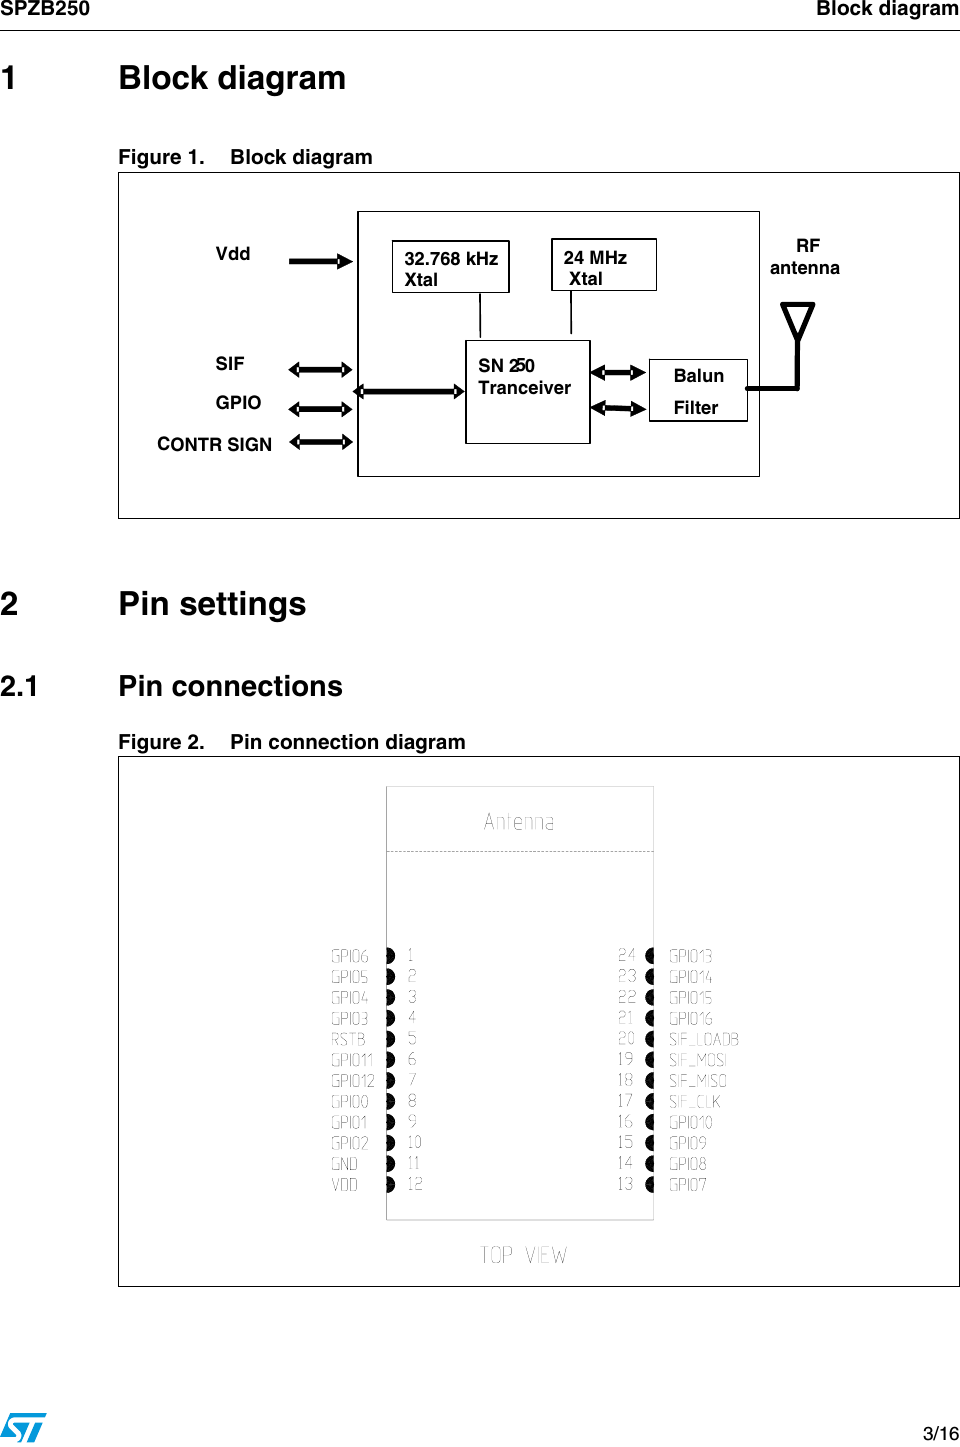 SPZB250 Block diagram   3/161 Block diagramFigure 1. Block diagram2 Pin settings2.1 Pin connectionsFigure 2. Pin connection diagram24 MHz XtalSN 250 Tranceiver Balun FilterVdd  SIF  GPIO  C ONTR SIGN   RF antenna32.768 kHz  Xtal  